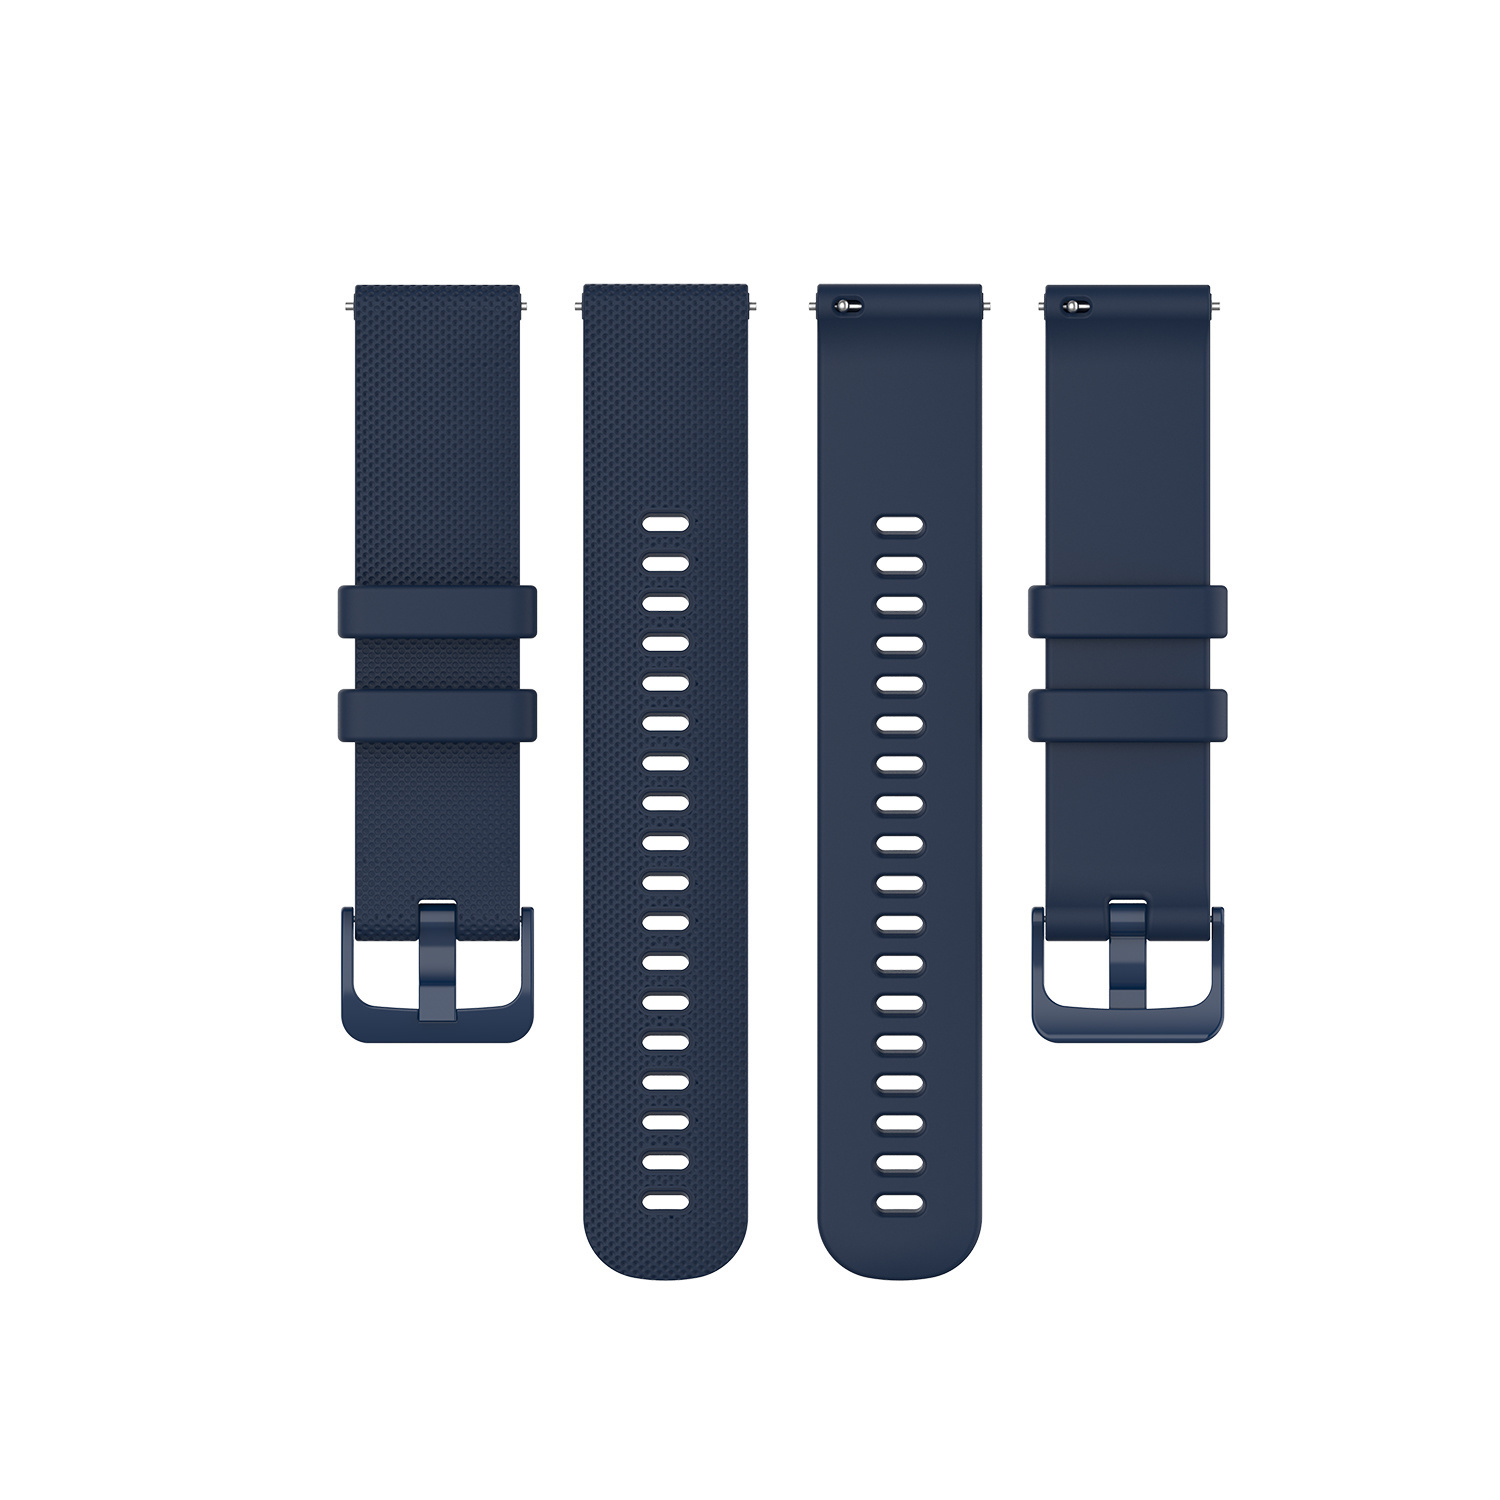 Cinturino sport con fibbia per Samsung Galaxy Watch - blu navy